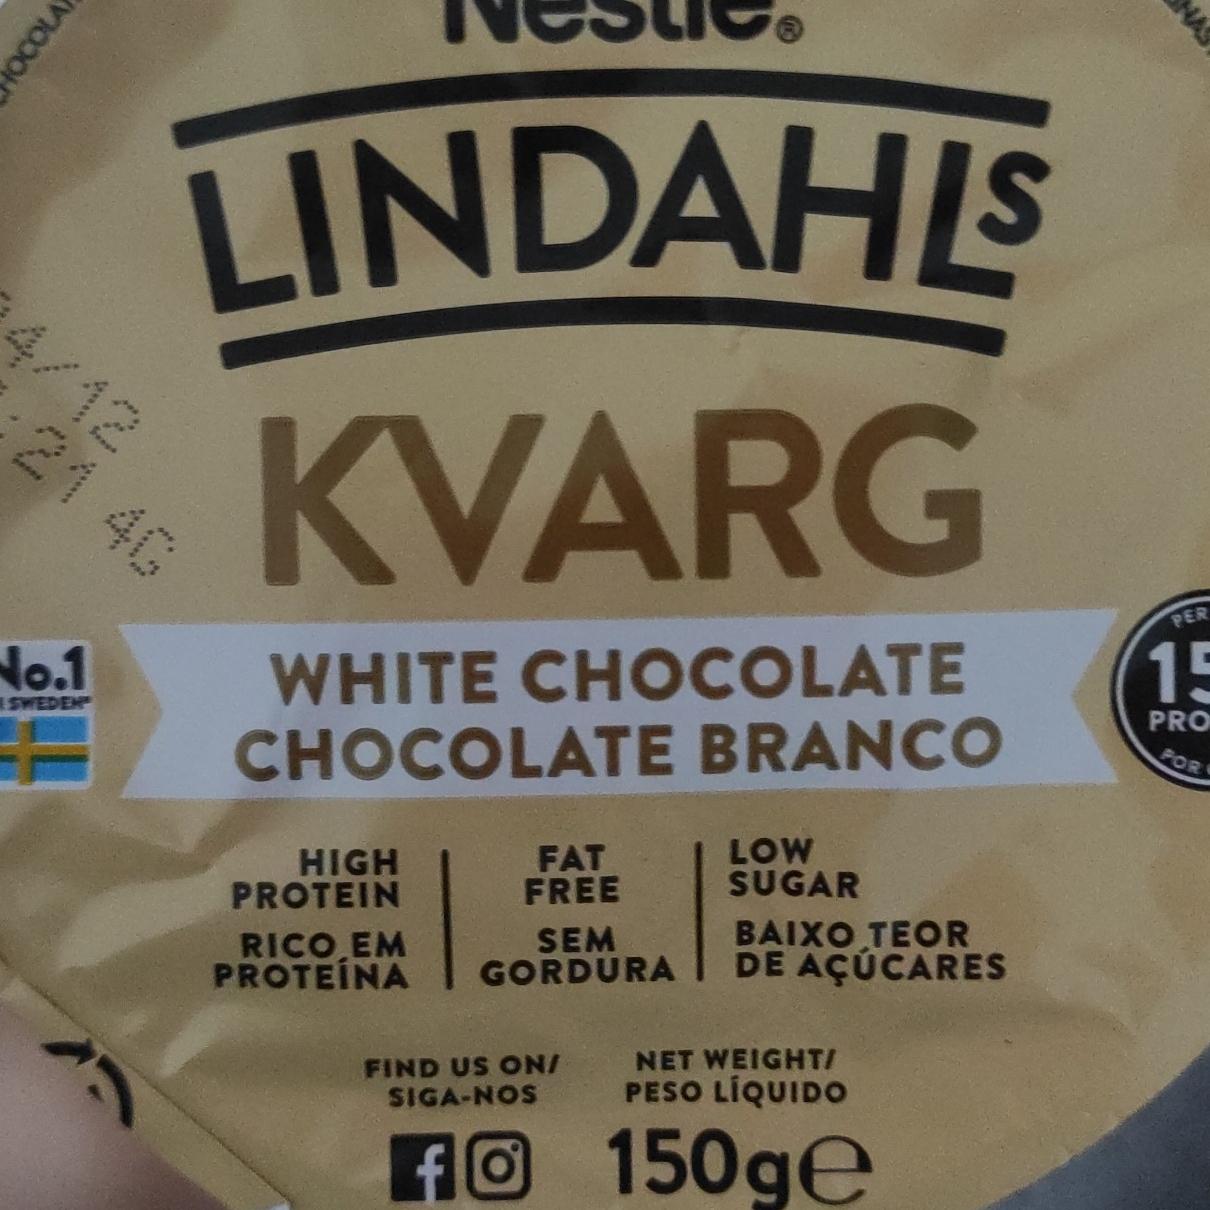 Фото - Білий шоколад Lindahl's Kvarg Nestlé